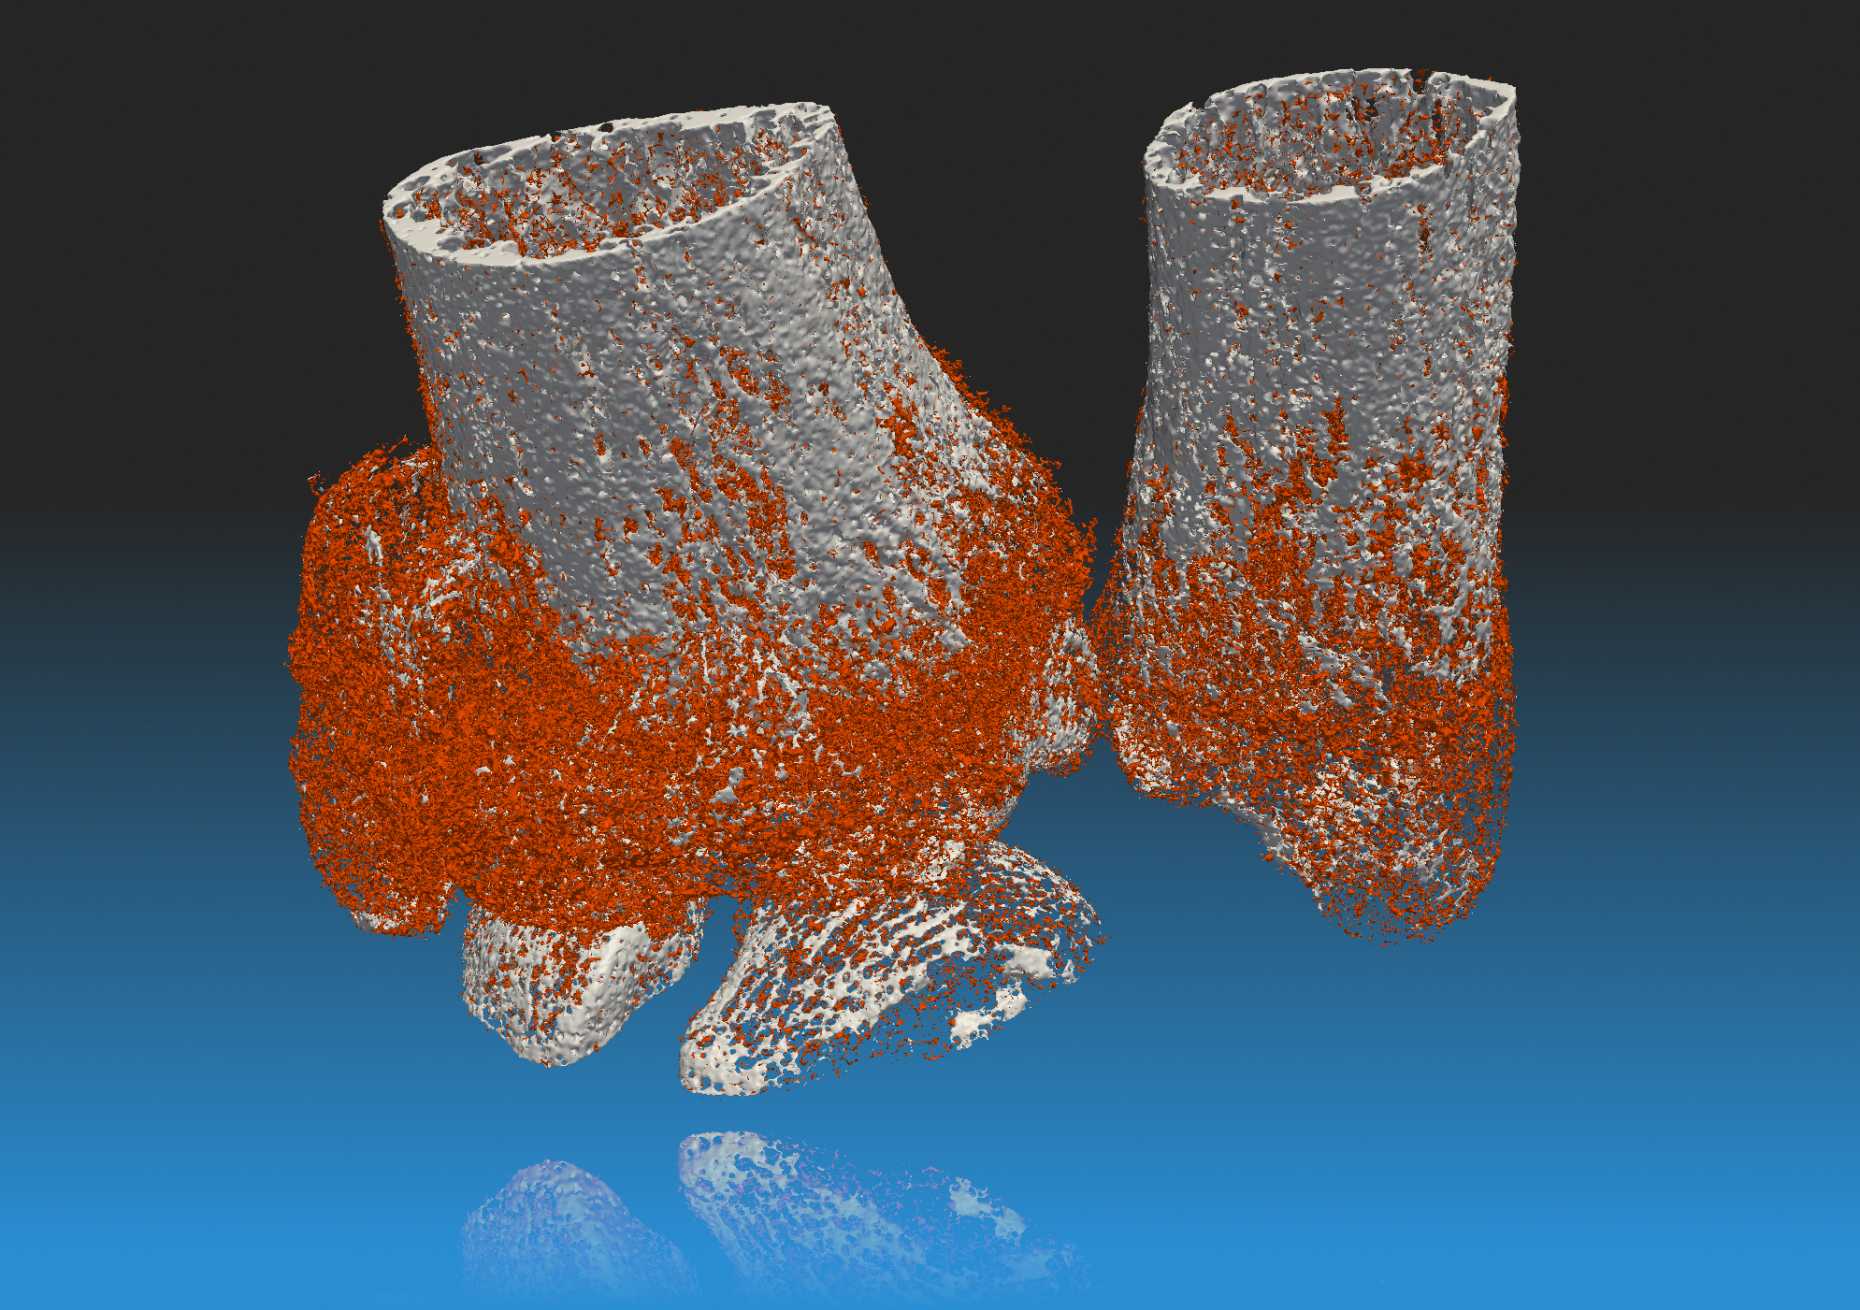 Enlarged view: Computational multiscale modelling of bone fracture healing mechanobiology